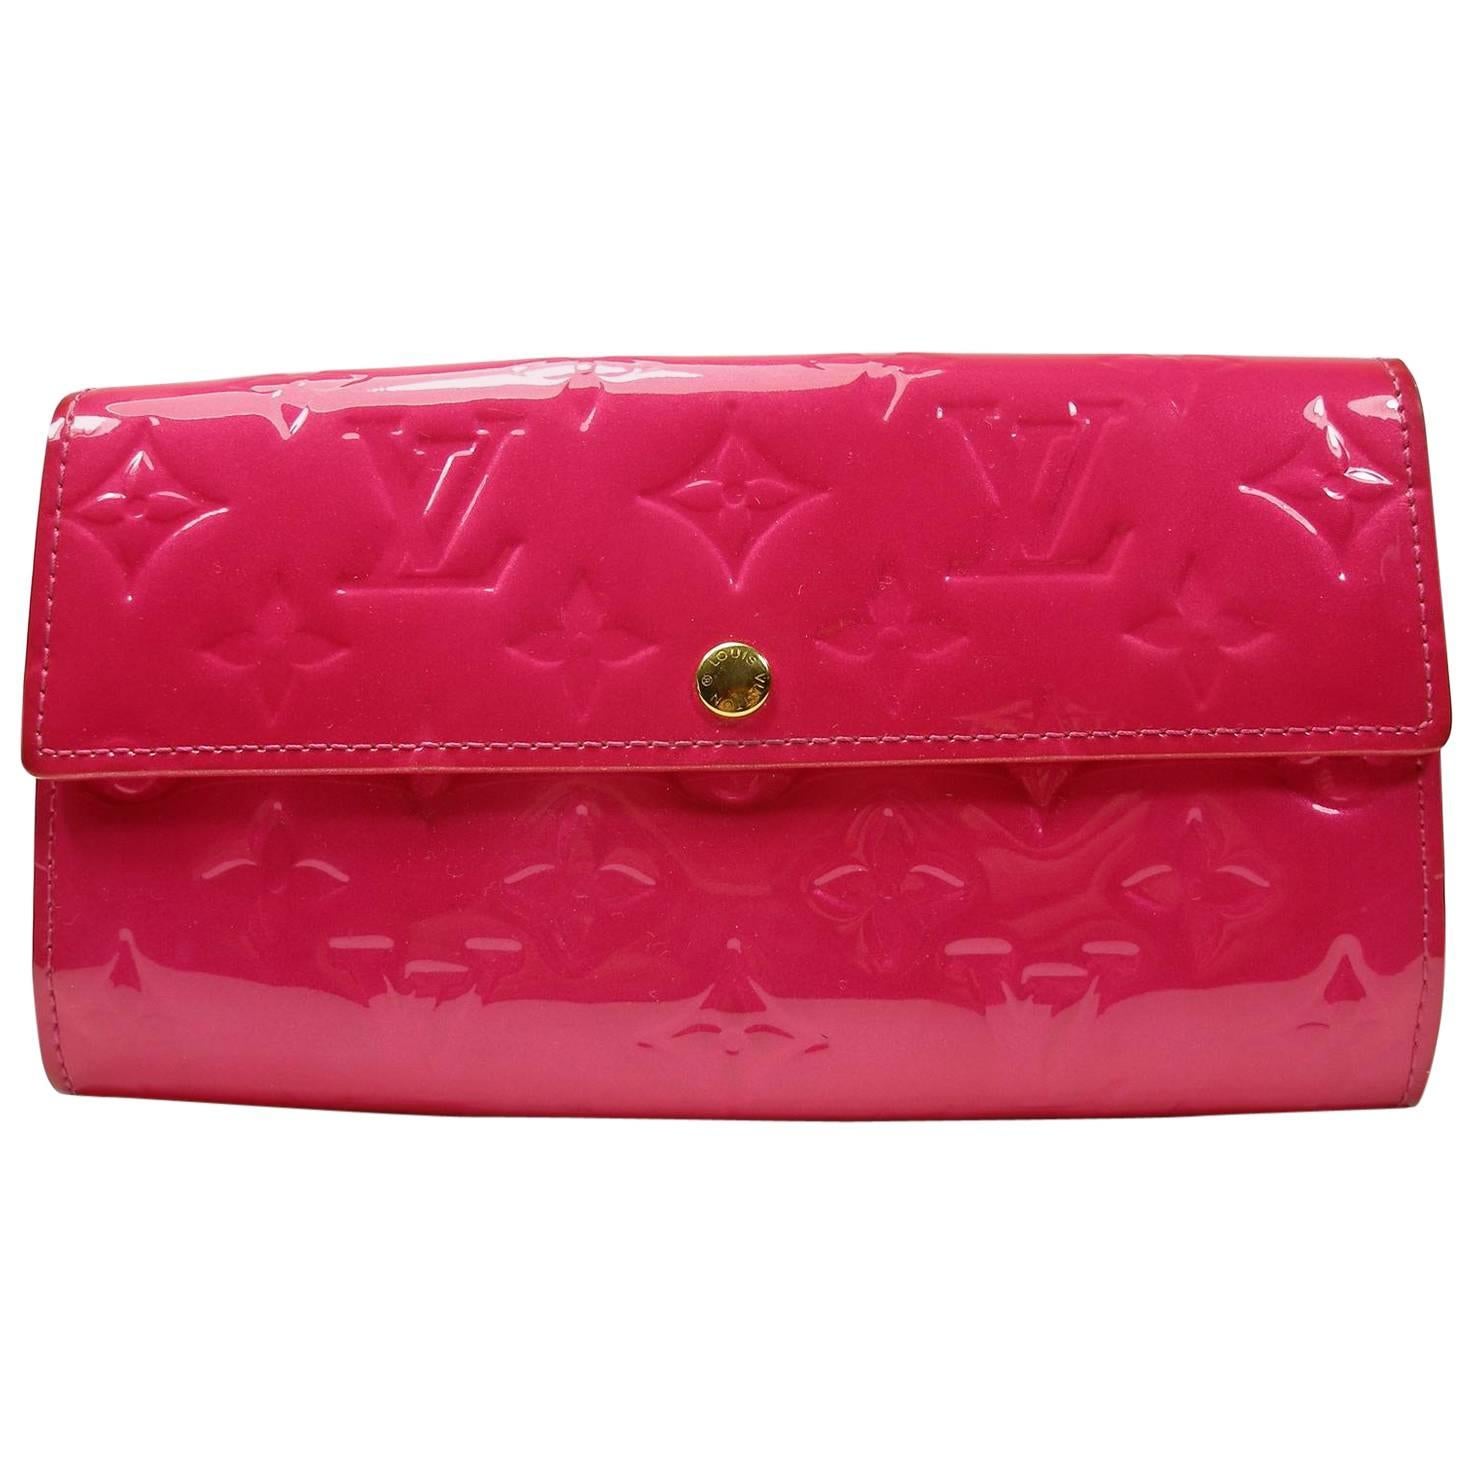  Louis Vuitton Vernis Sarah Wallet Monogram Vernis Rose Pink / Good Condition 